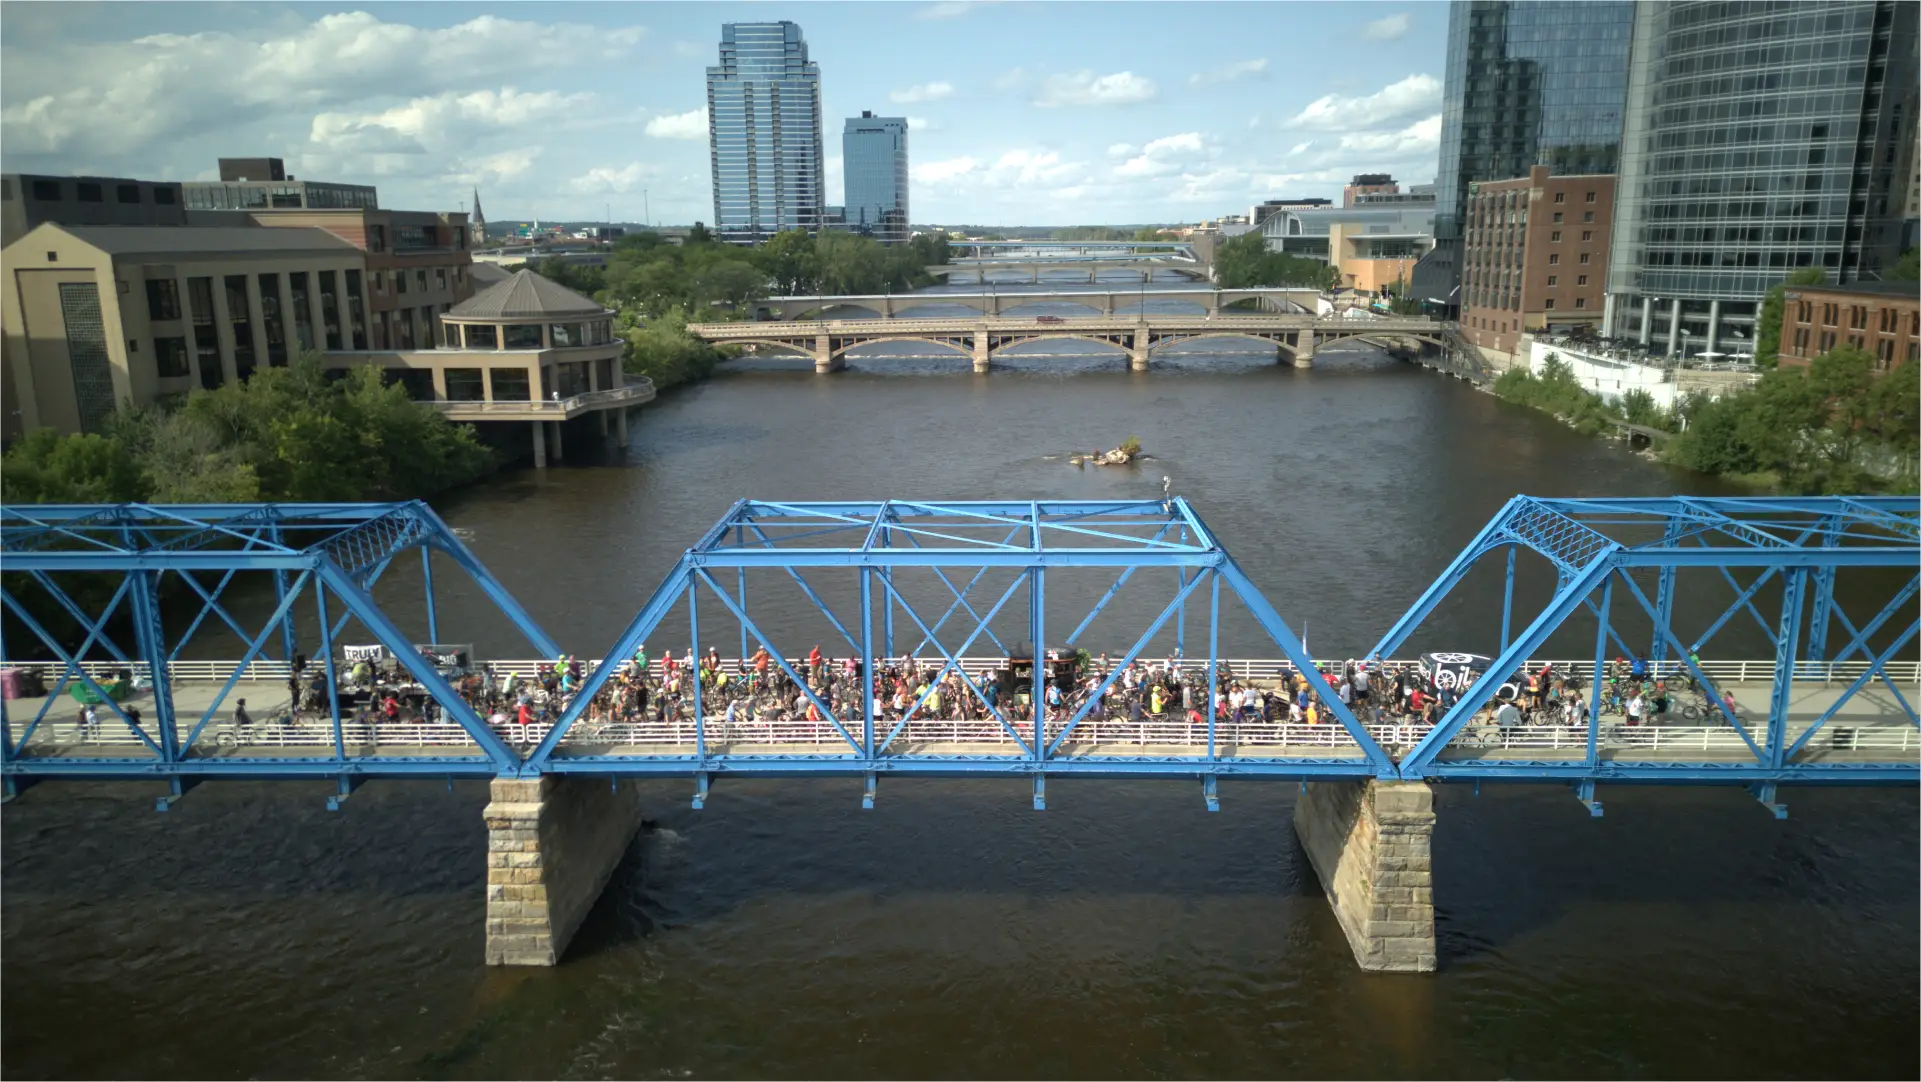 The Blue Bridge Bike Event